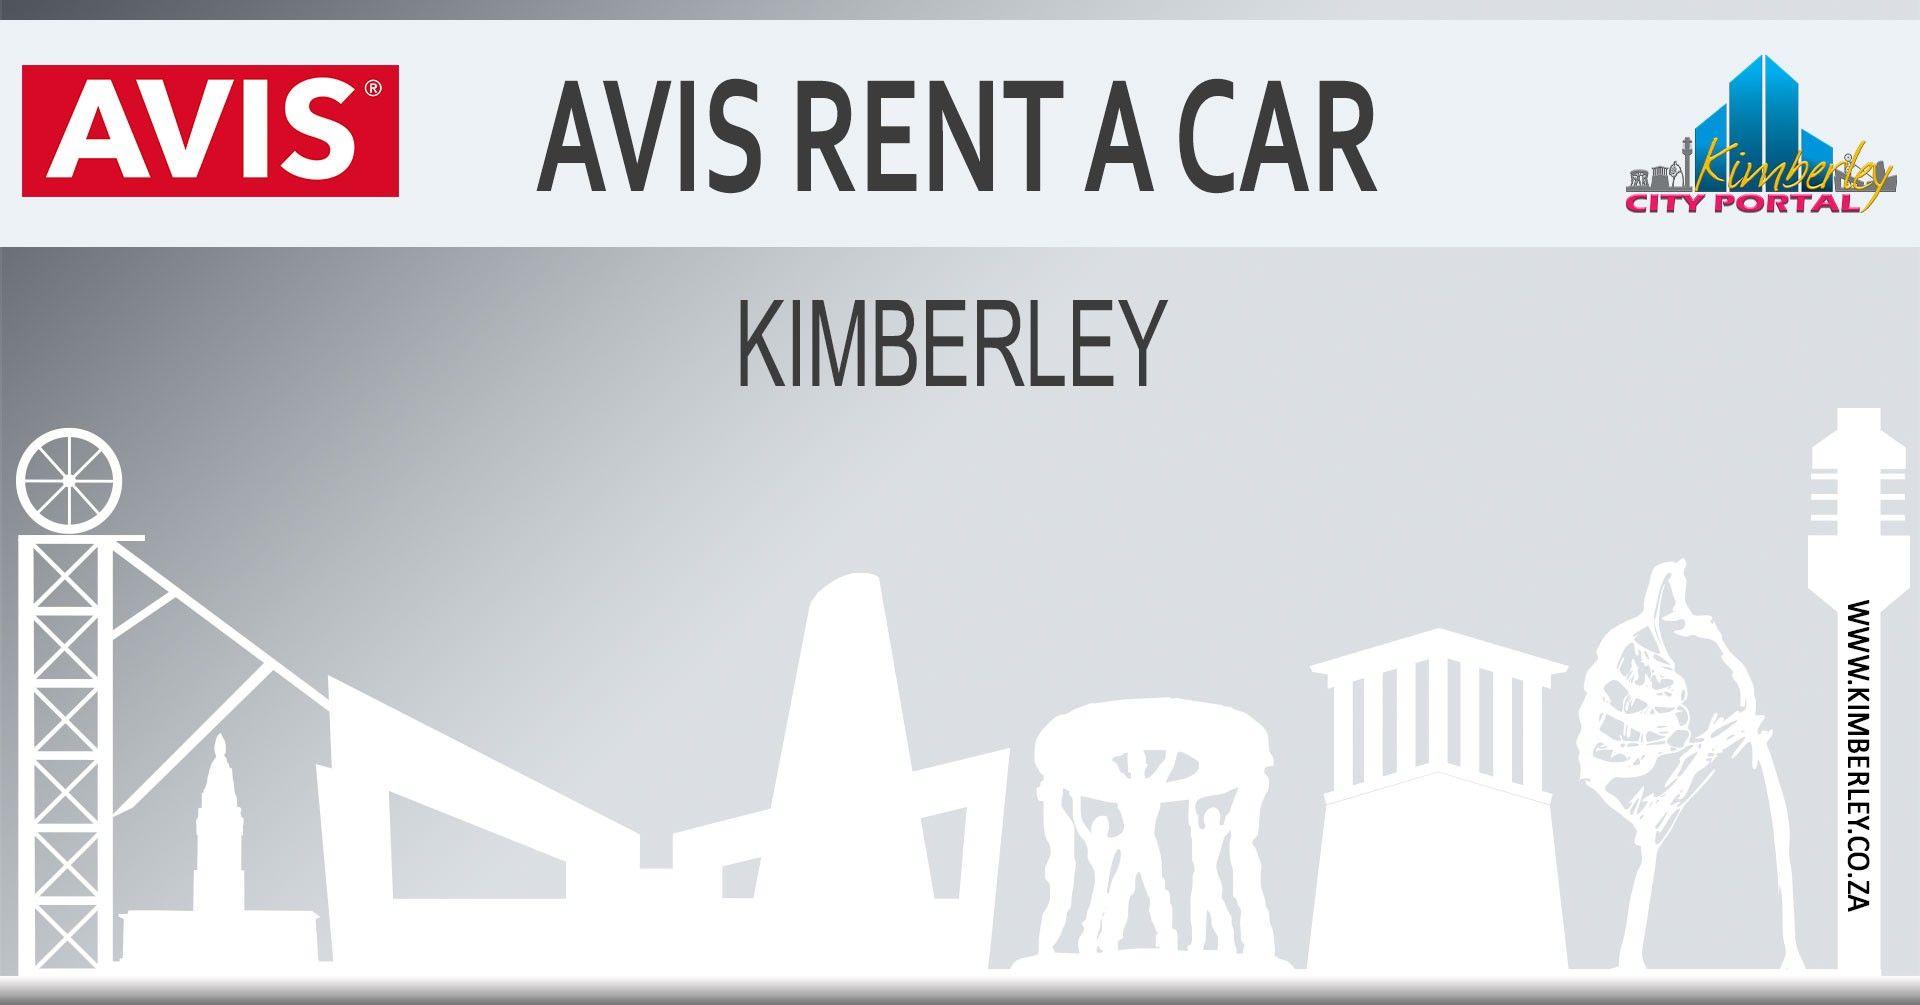 Avis Rent a Car Logo - AVIS Rent a Car • Kimberley • CITY PORTAL